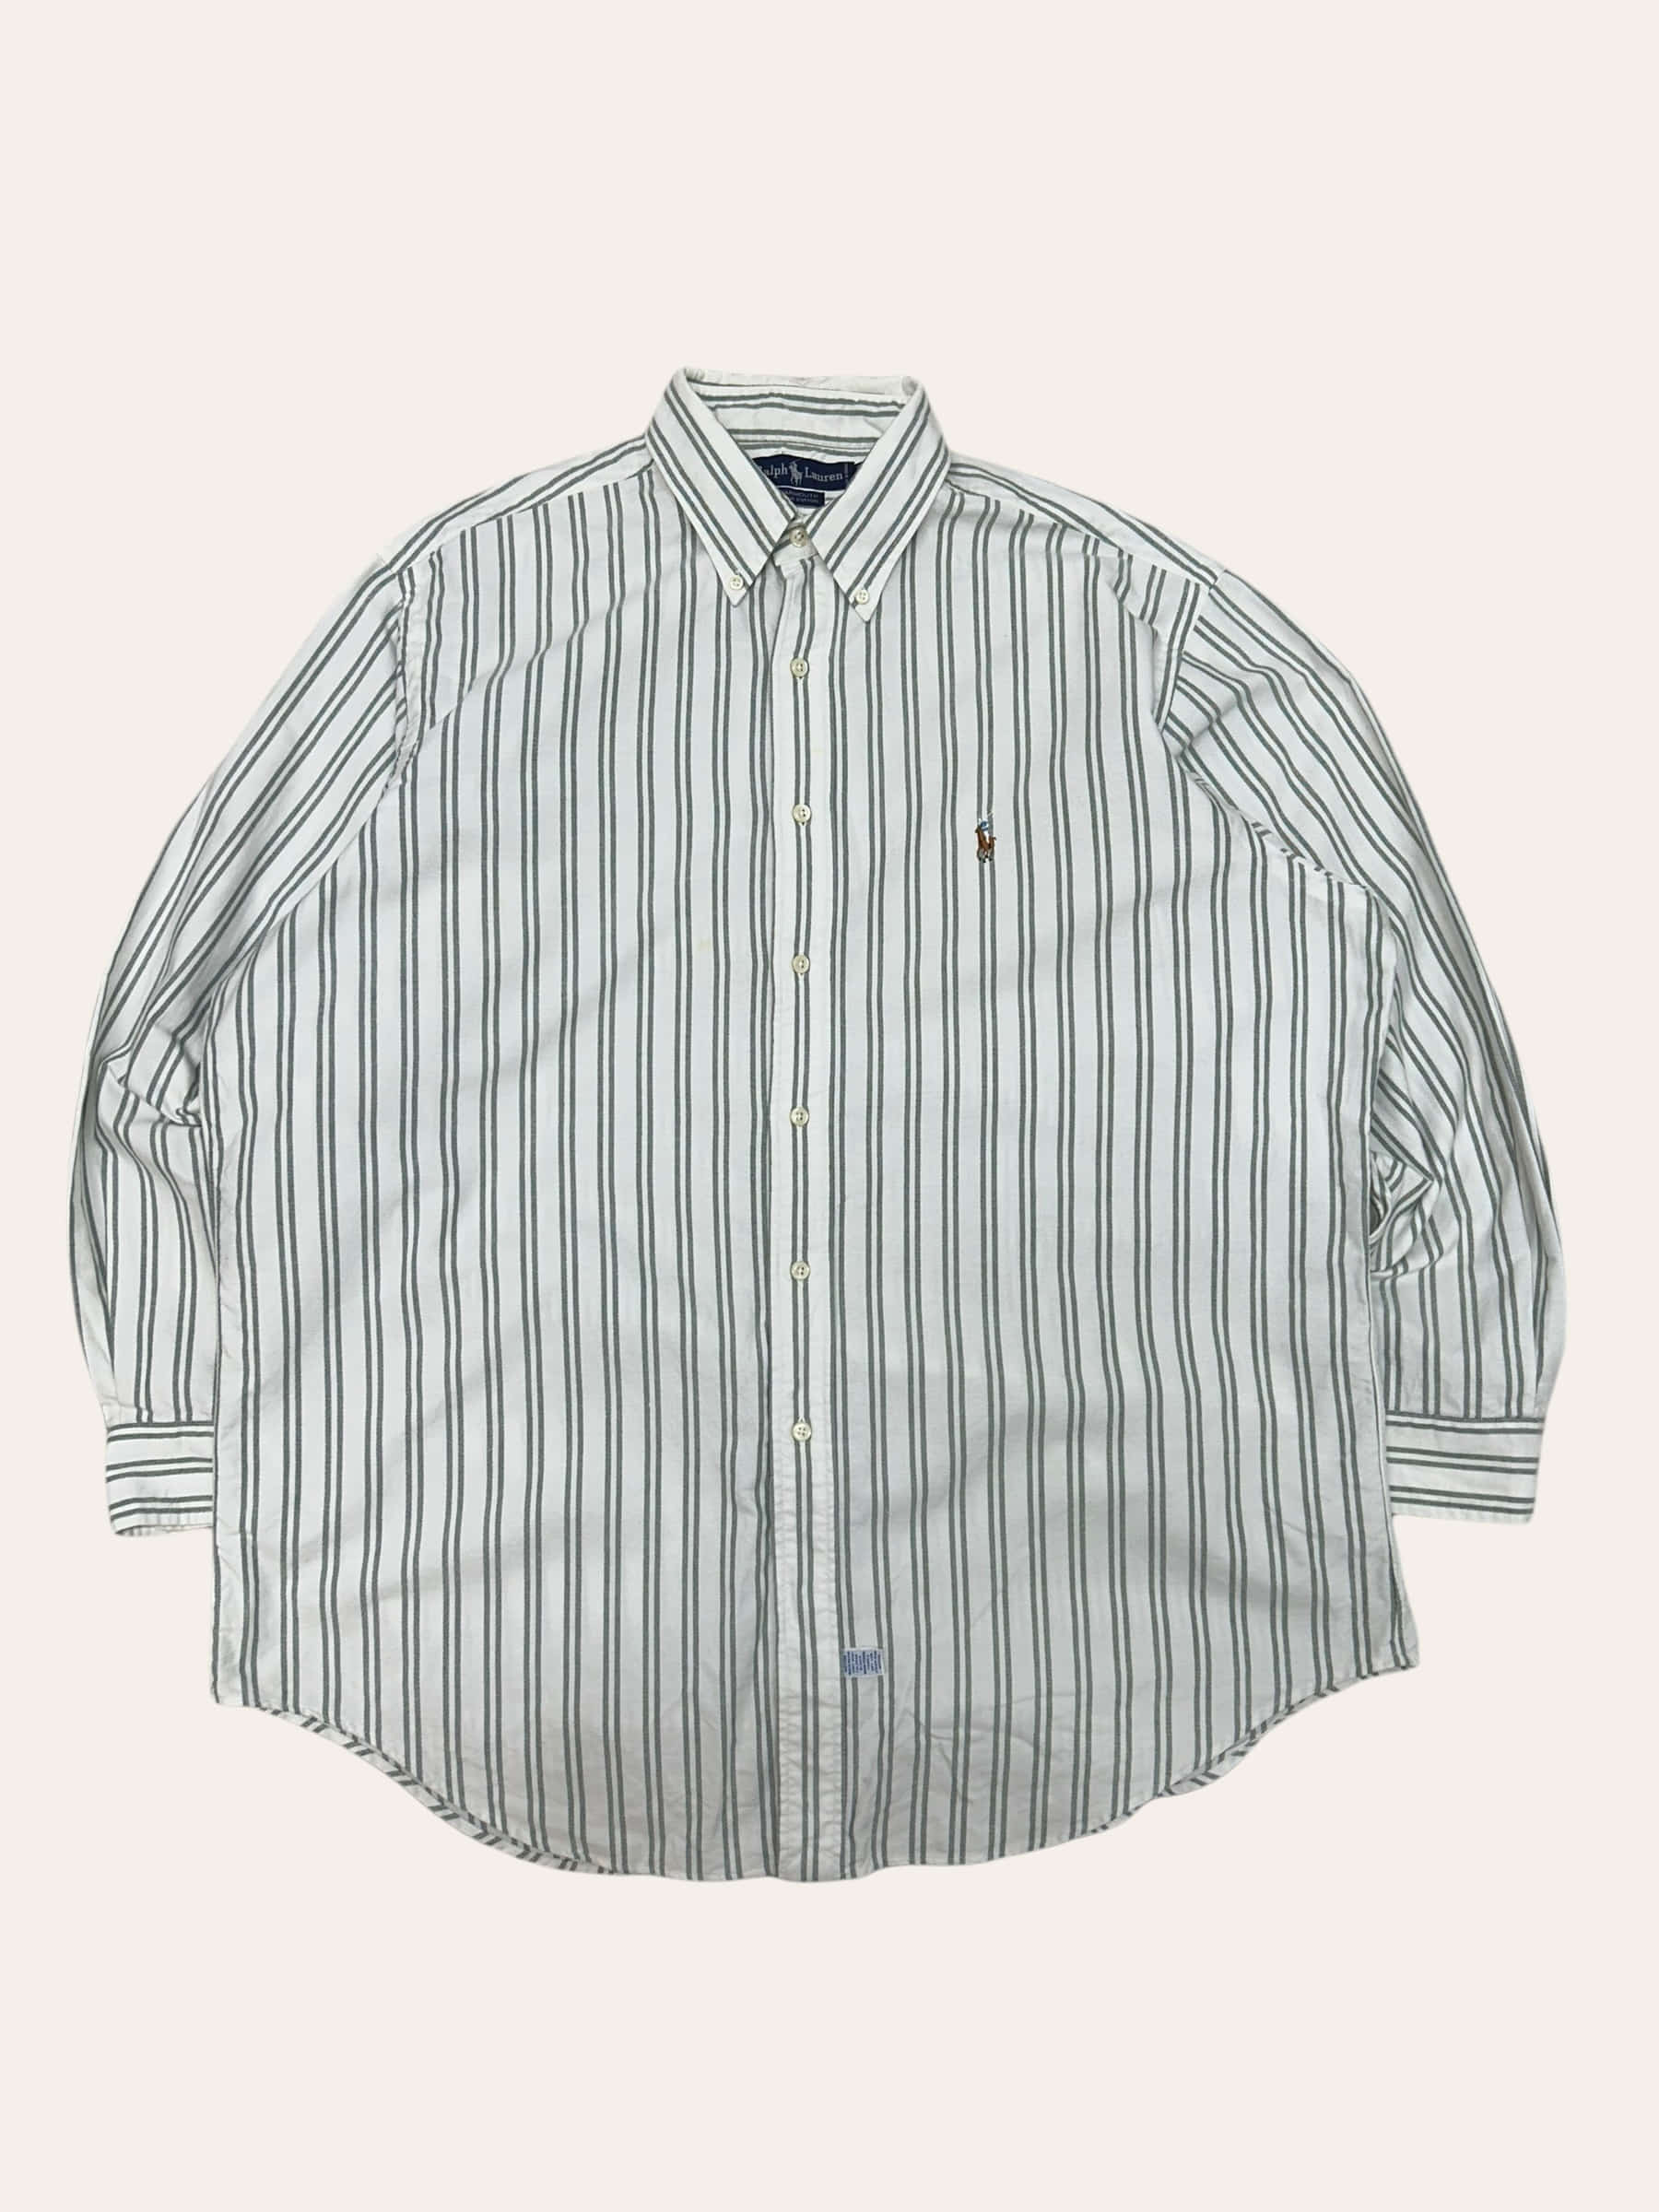 (From USA)Polo ralph lauren green stripe oxford shirt 16.5